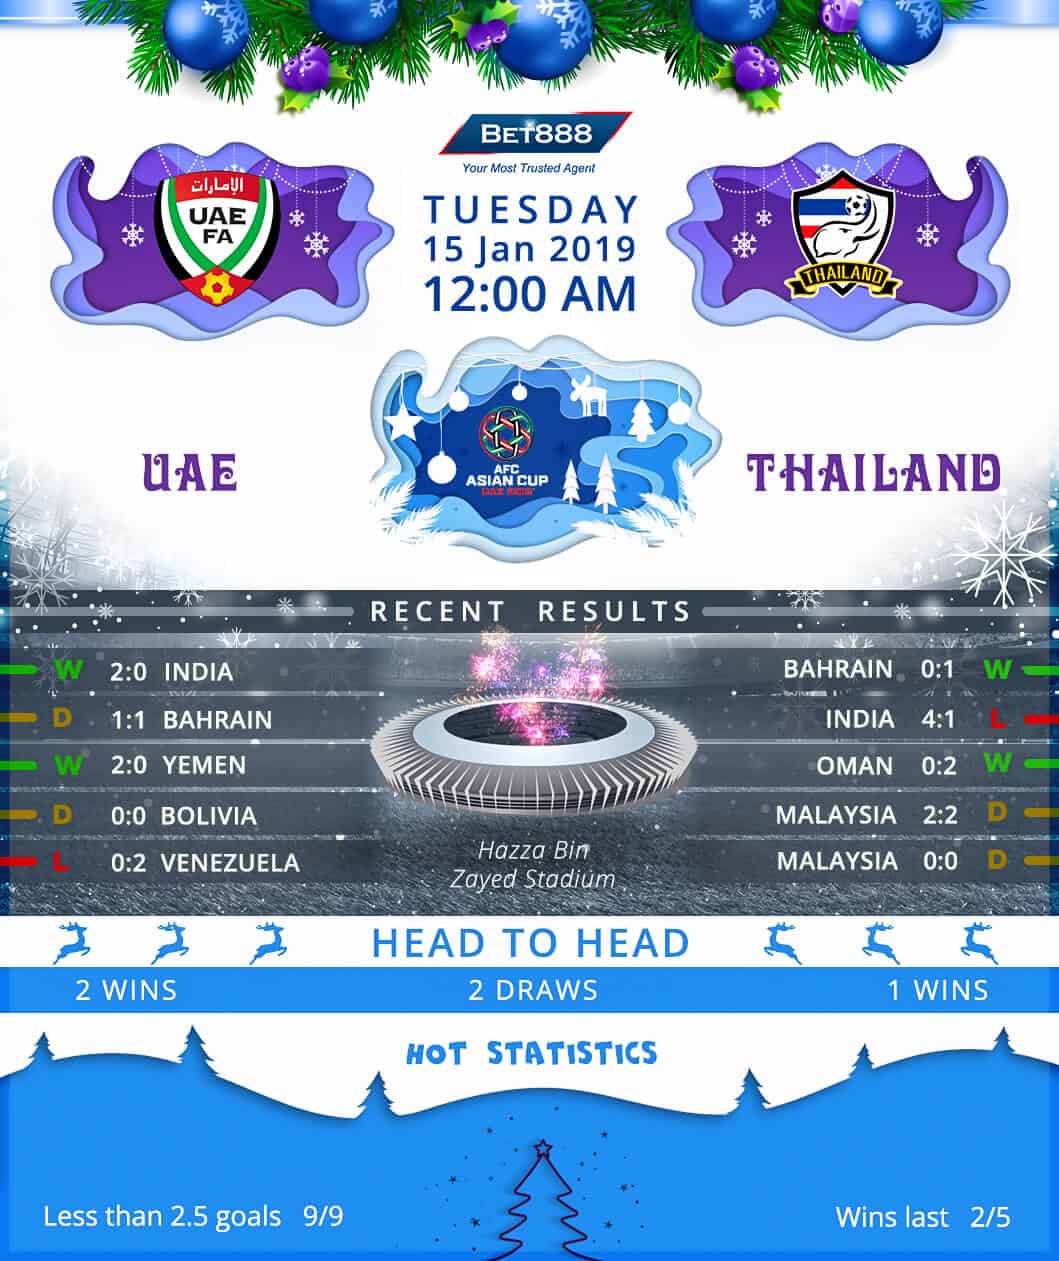 The United Arab Emirates vs Thailand 15/01/19